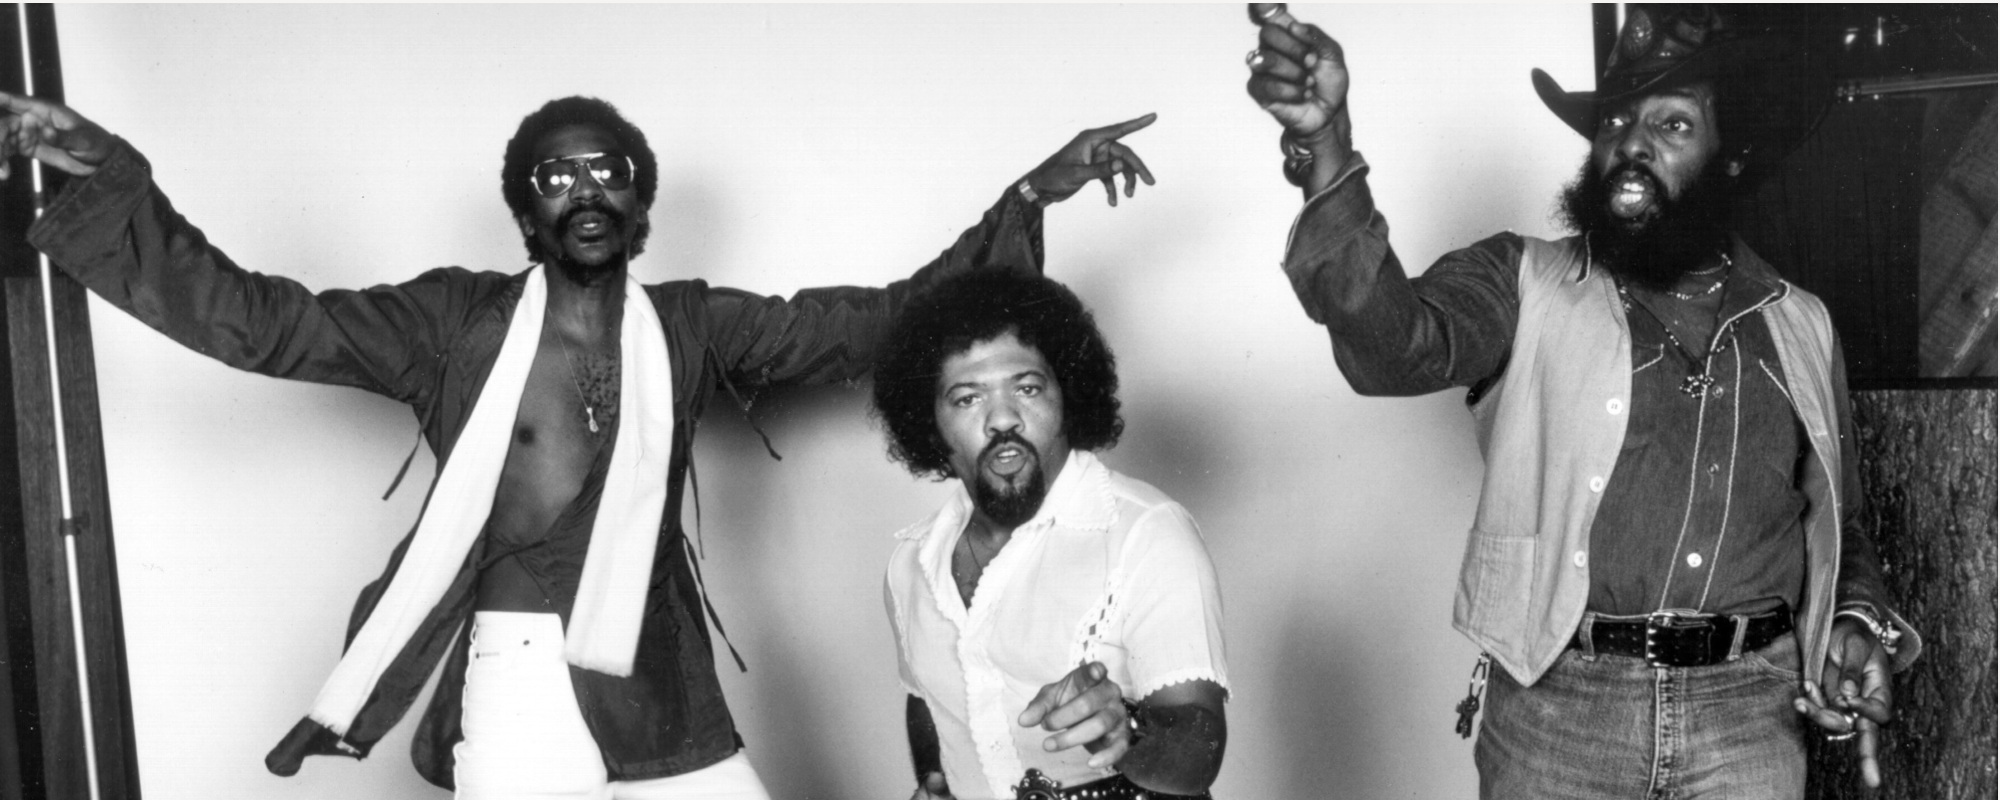 Original Parliament-Funkadelic Member Fuzzy Haskins Dead at 81